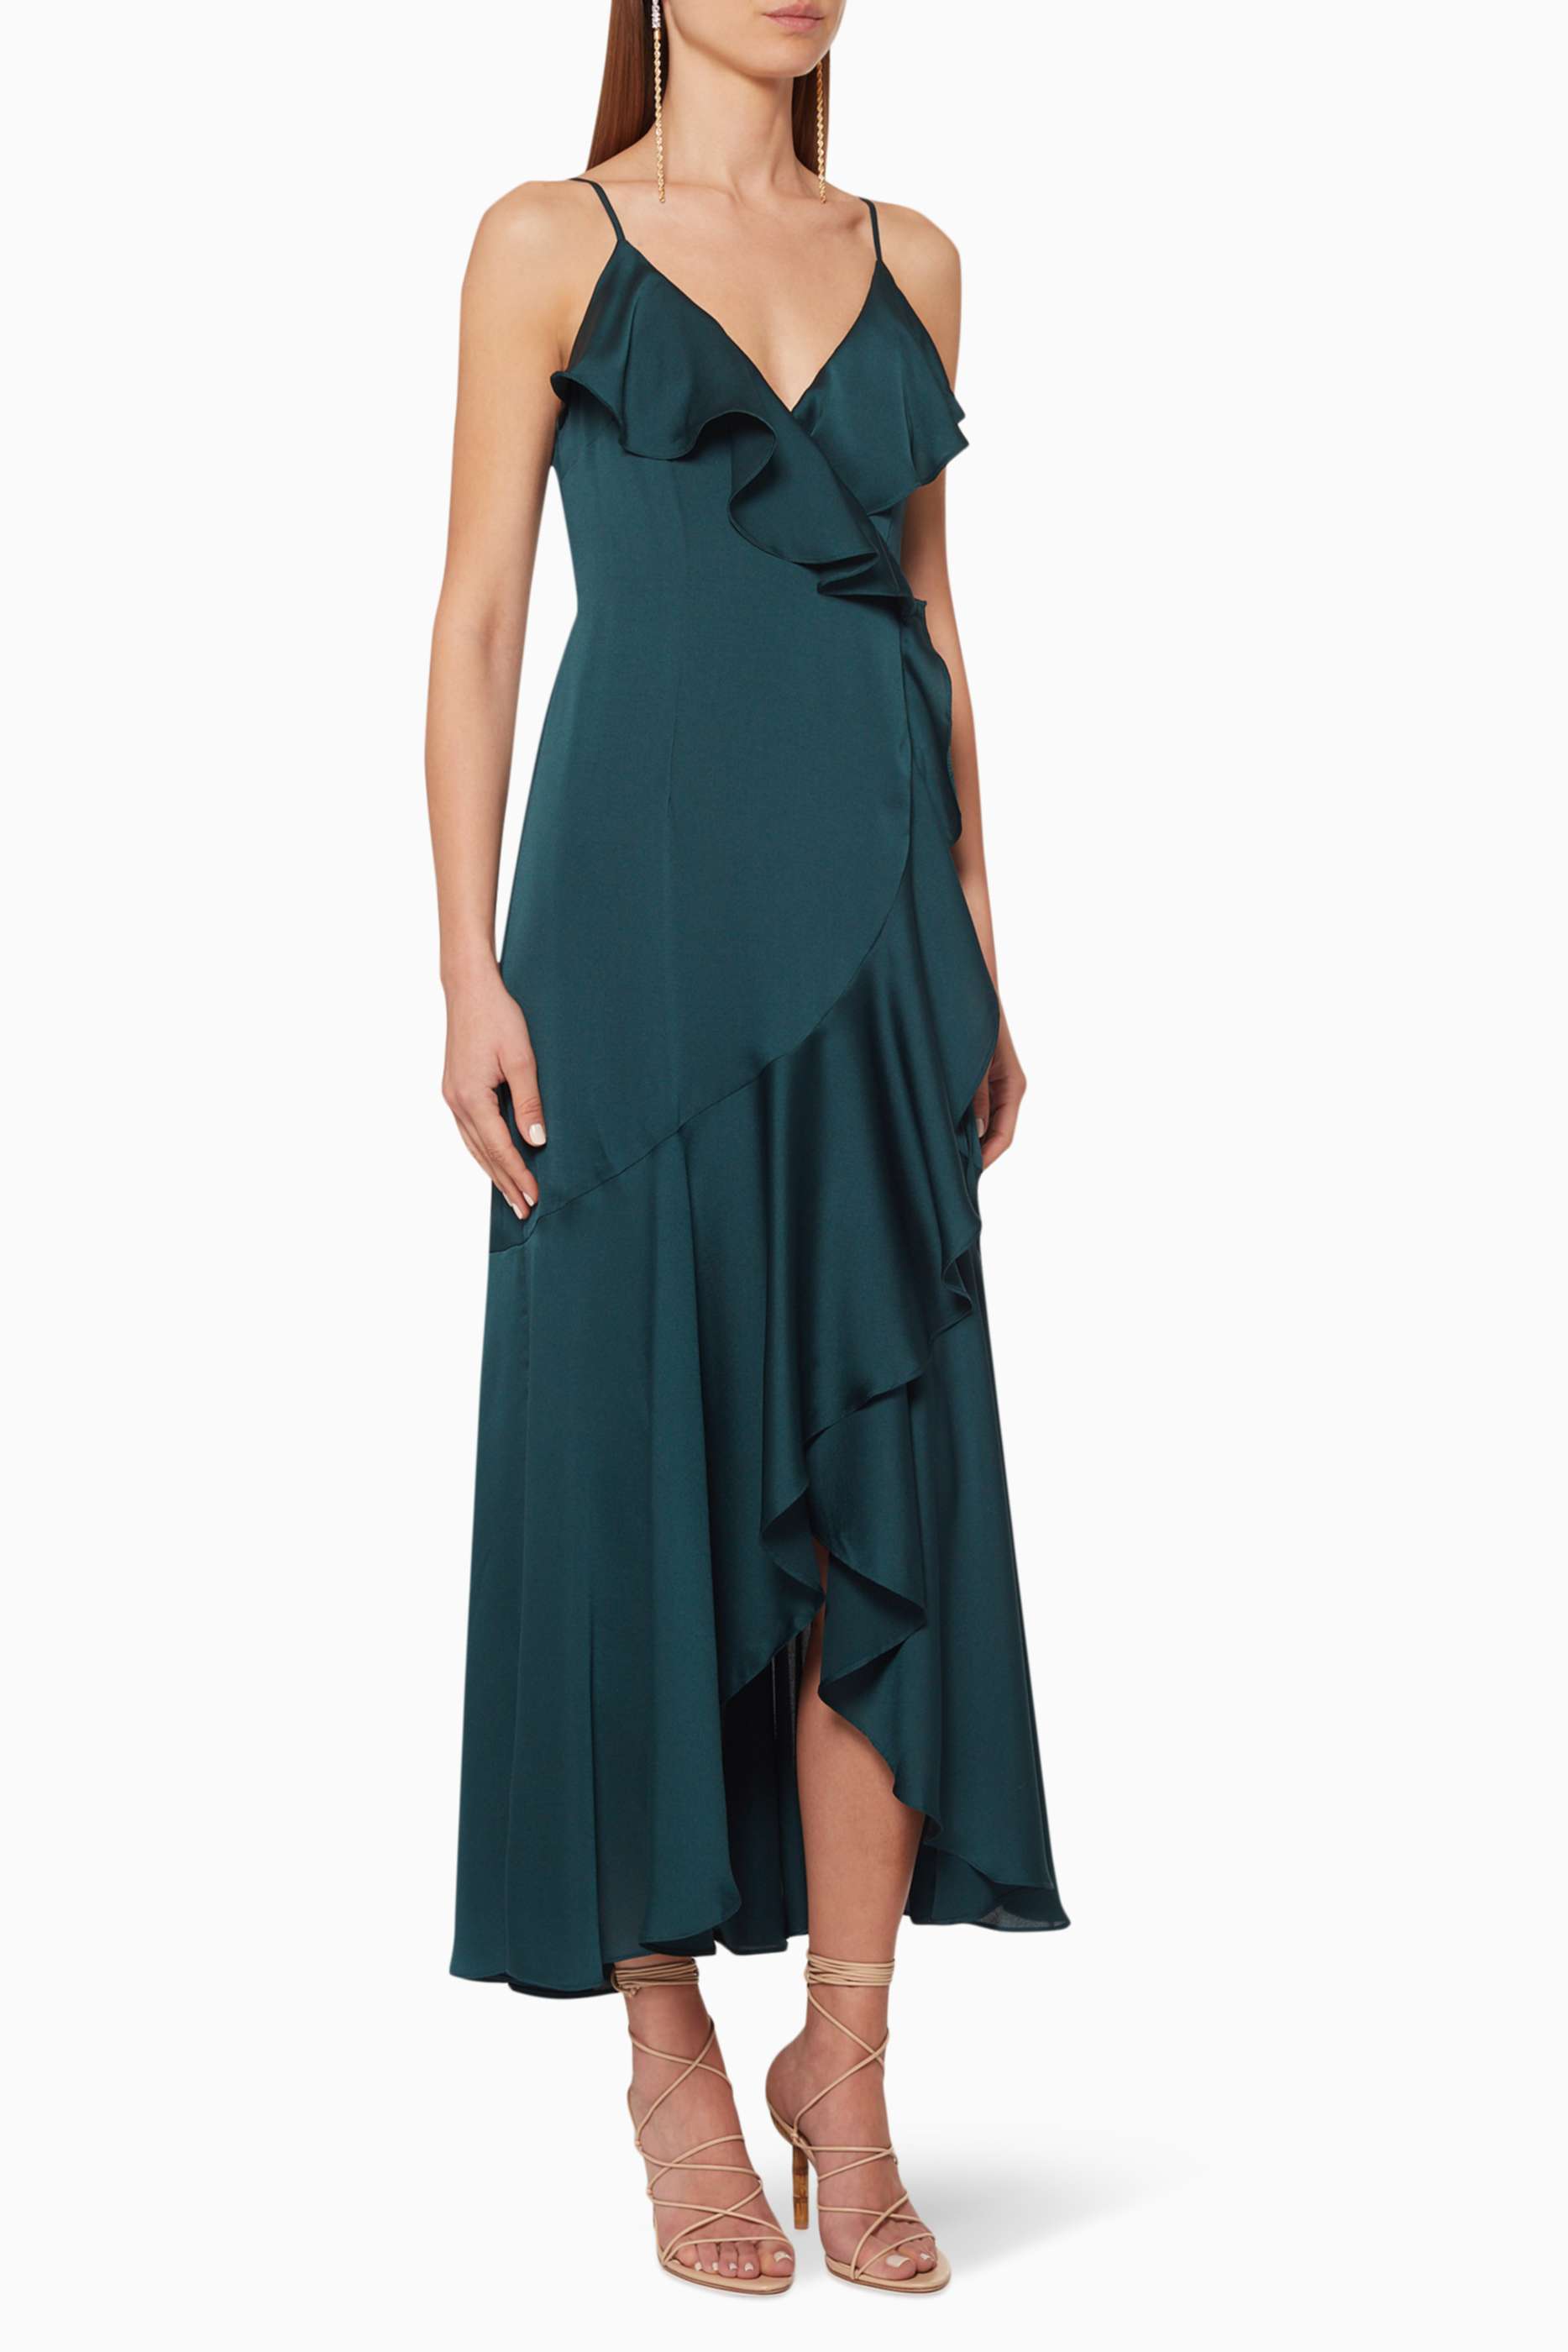 SHONA JOY Green Luxe Frill Wrap Dress ...